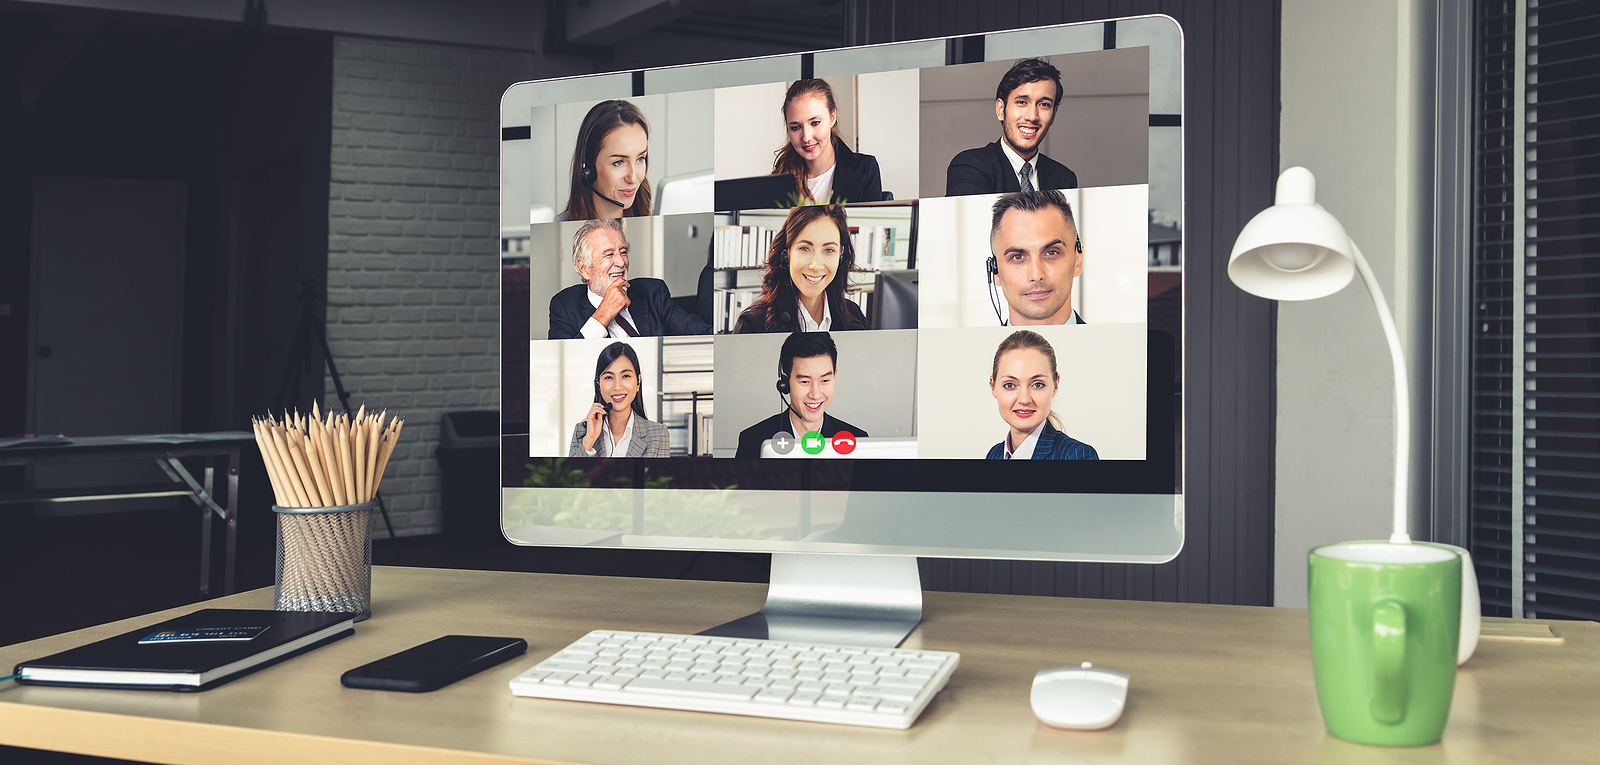 How to Run Flawless Virtual Meetings